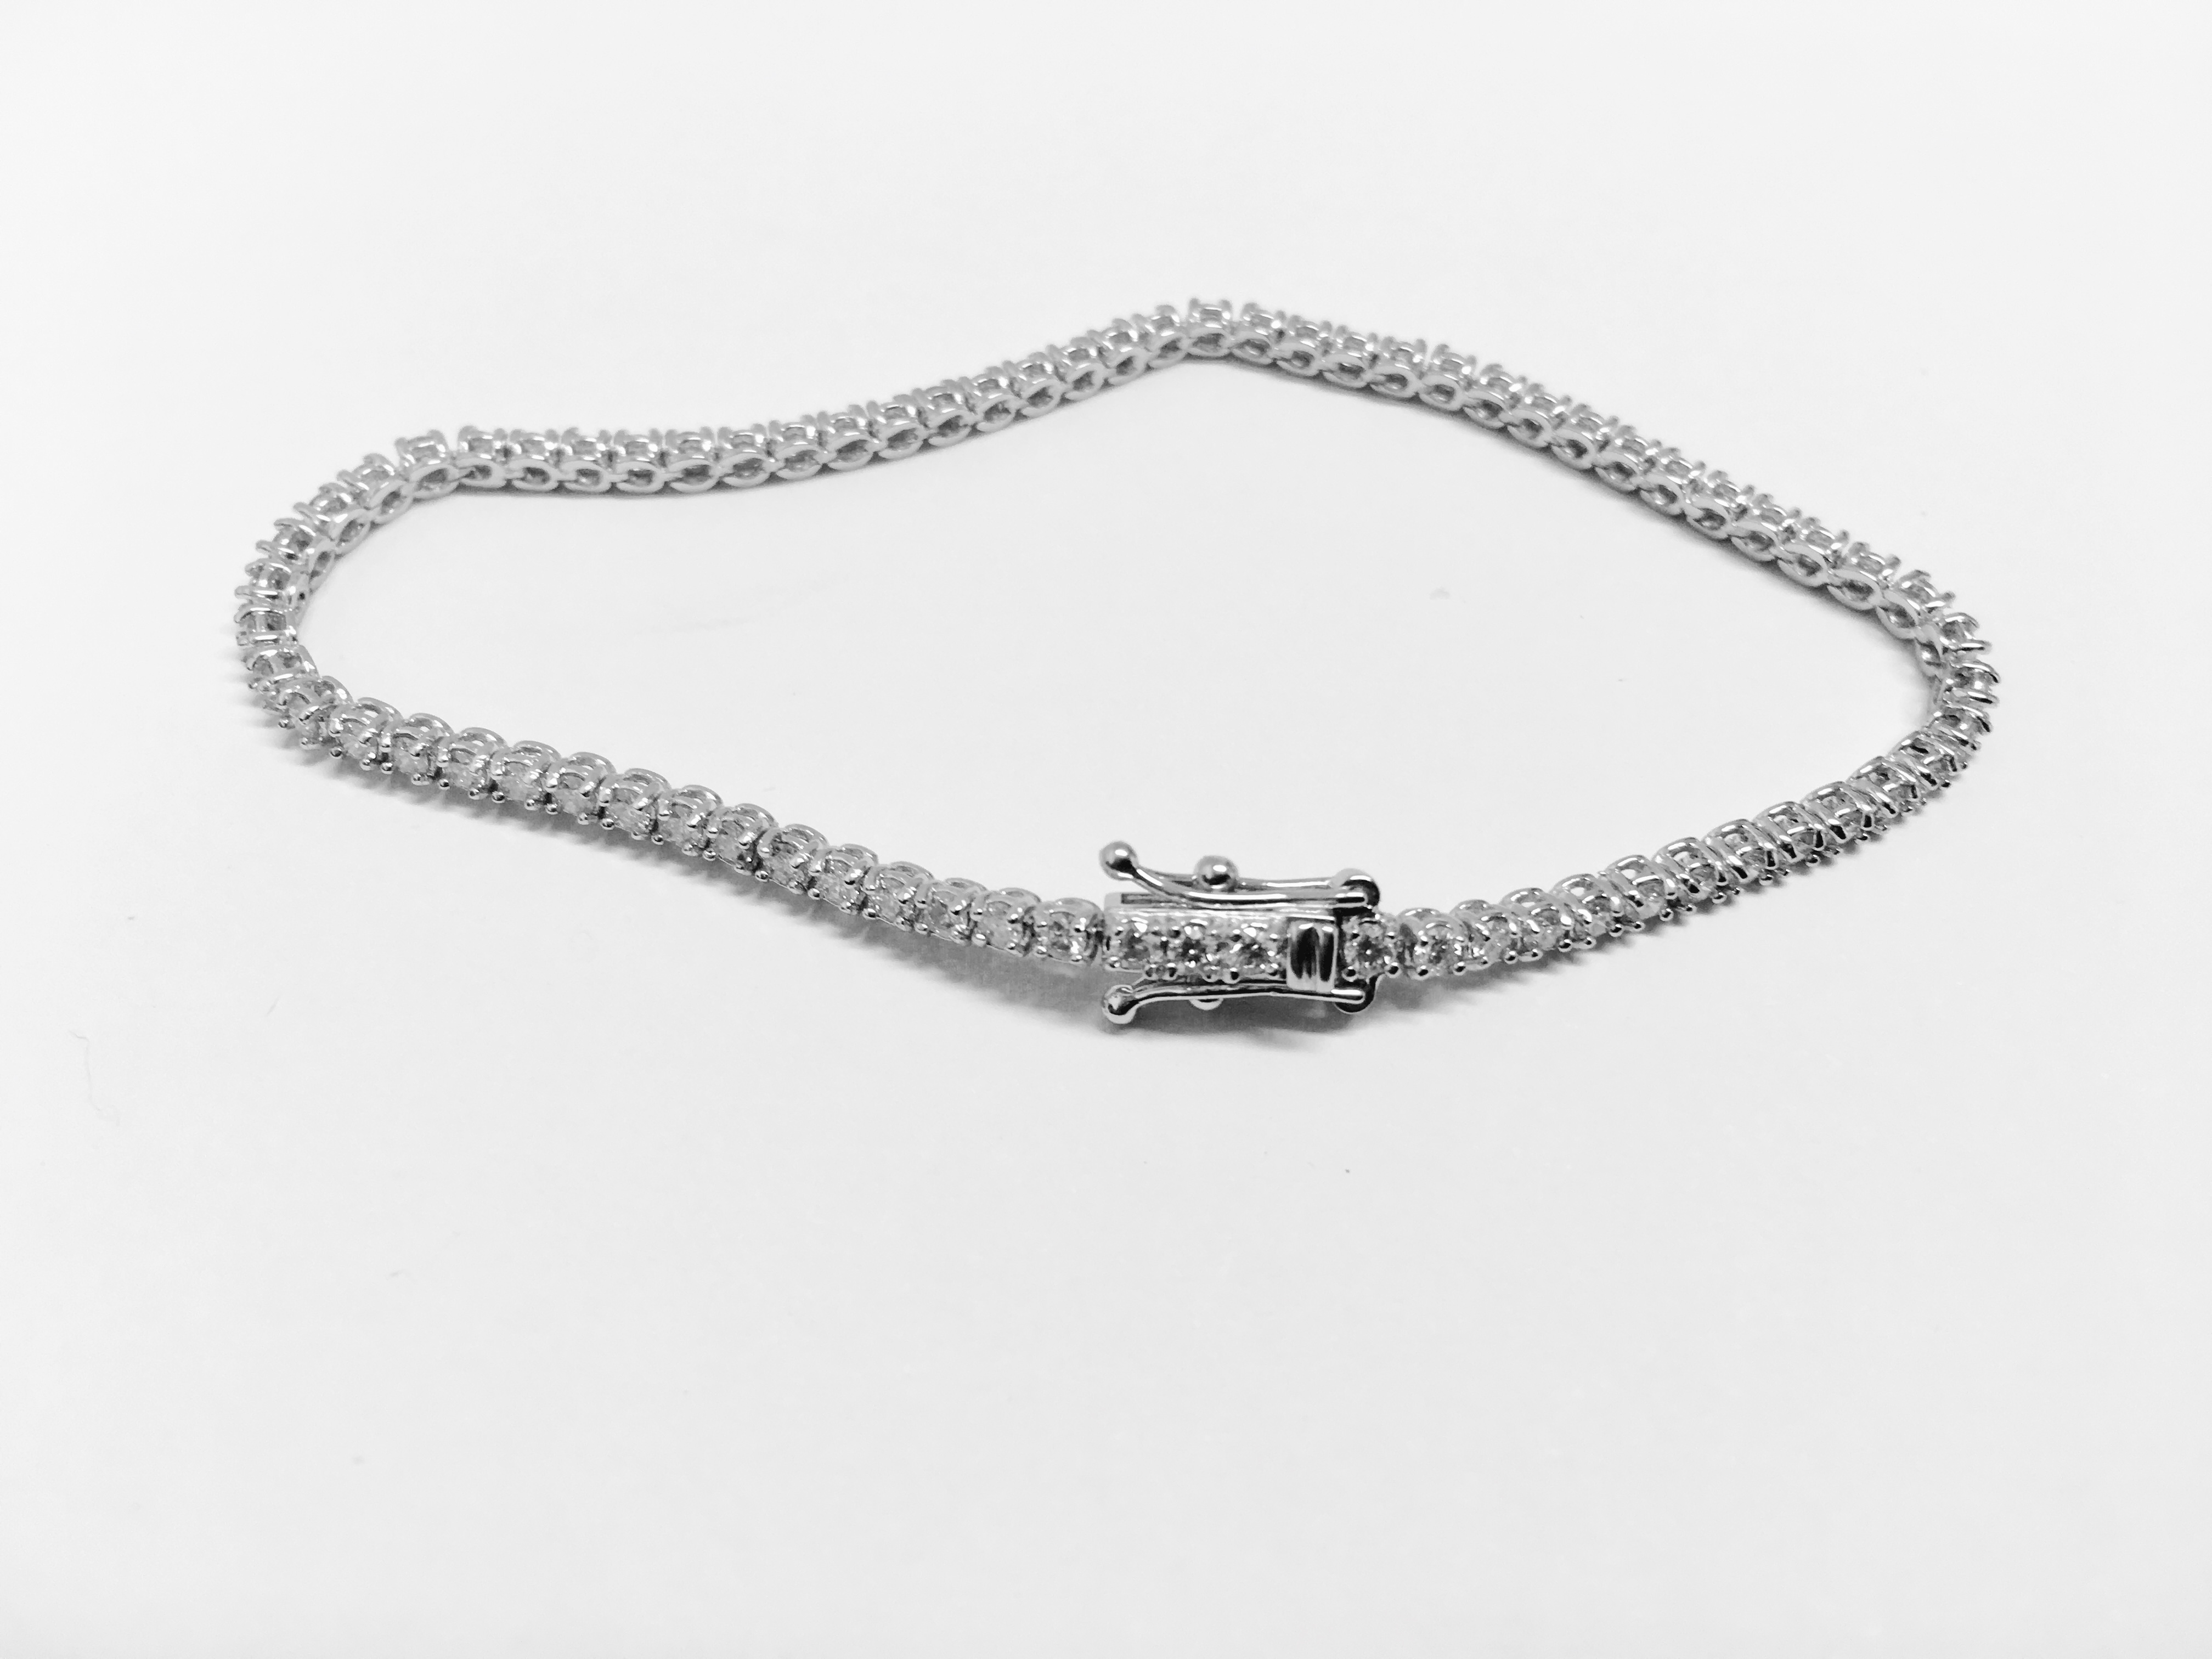 2.10ct diamond tennis bracelet with 70 brilliant cut diamonds